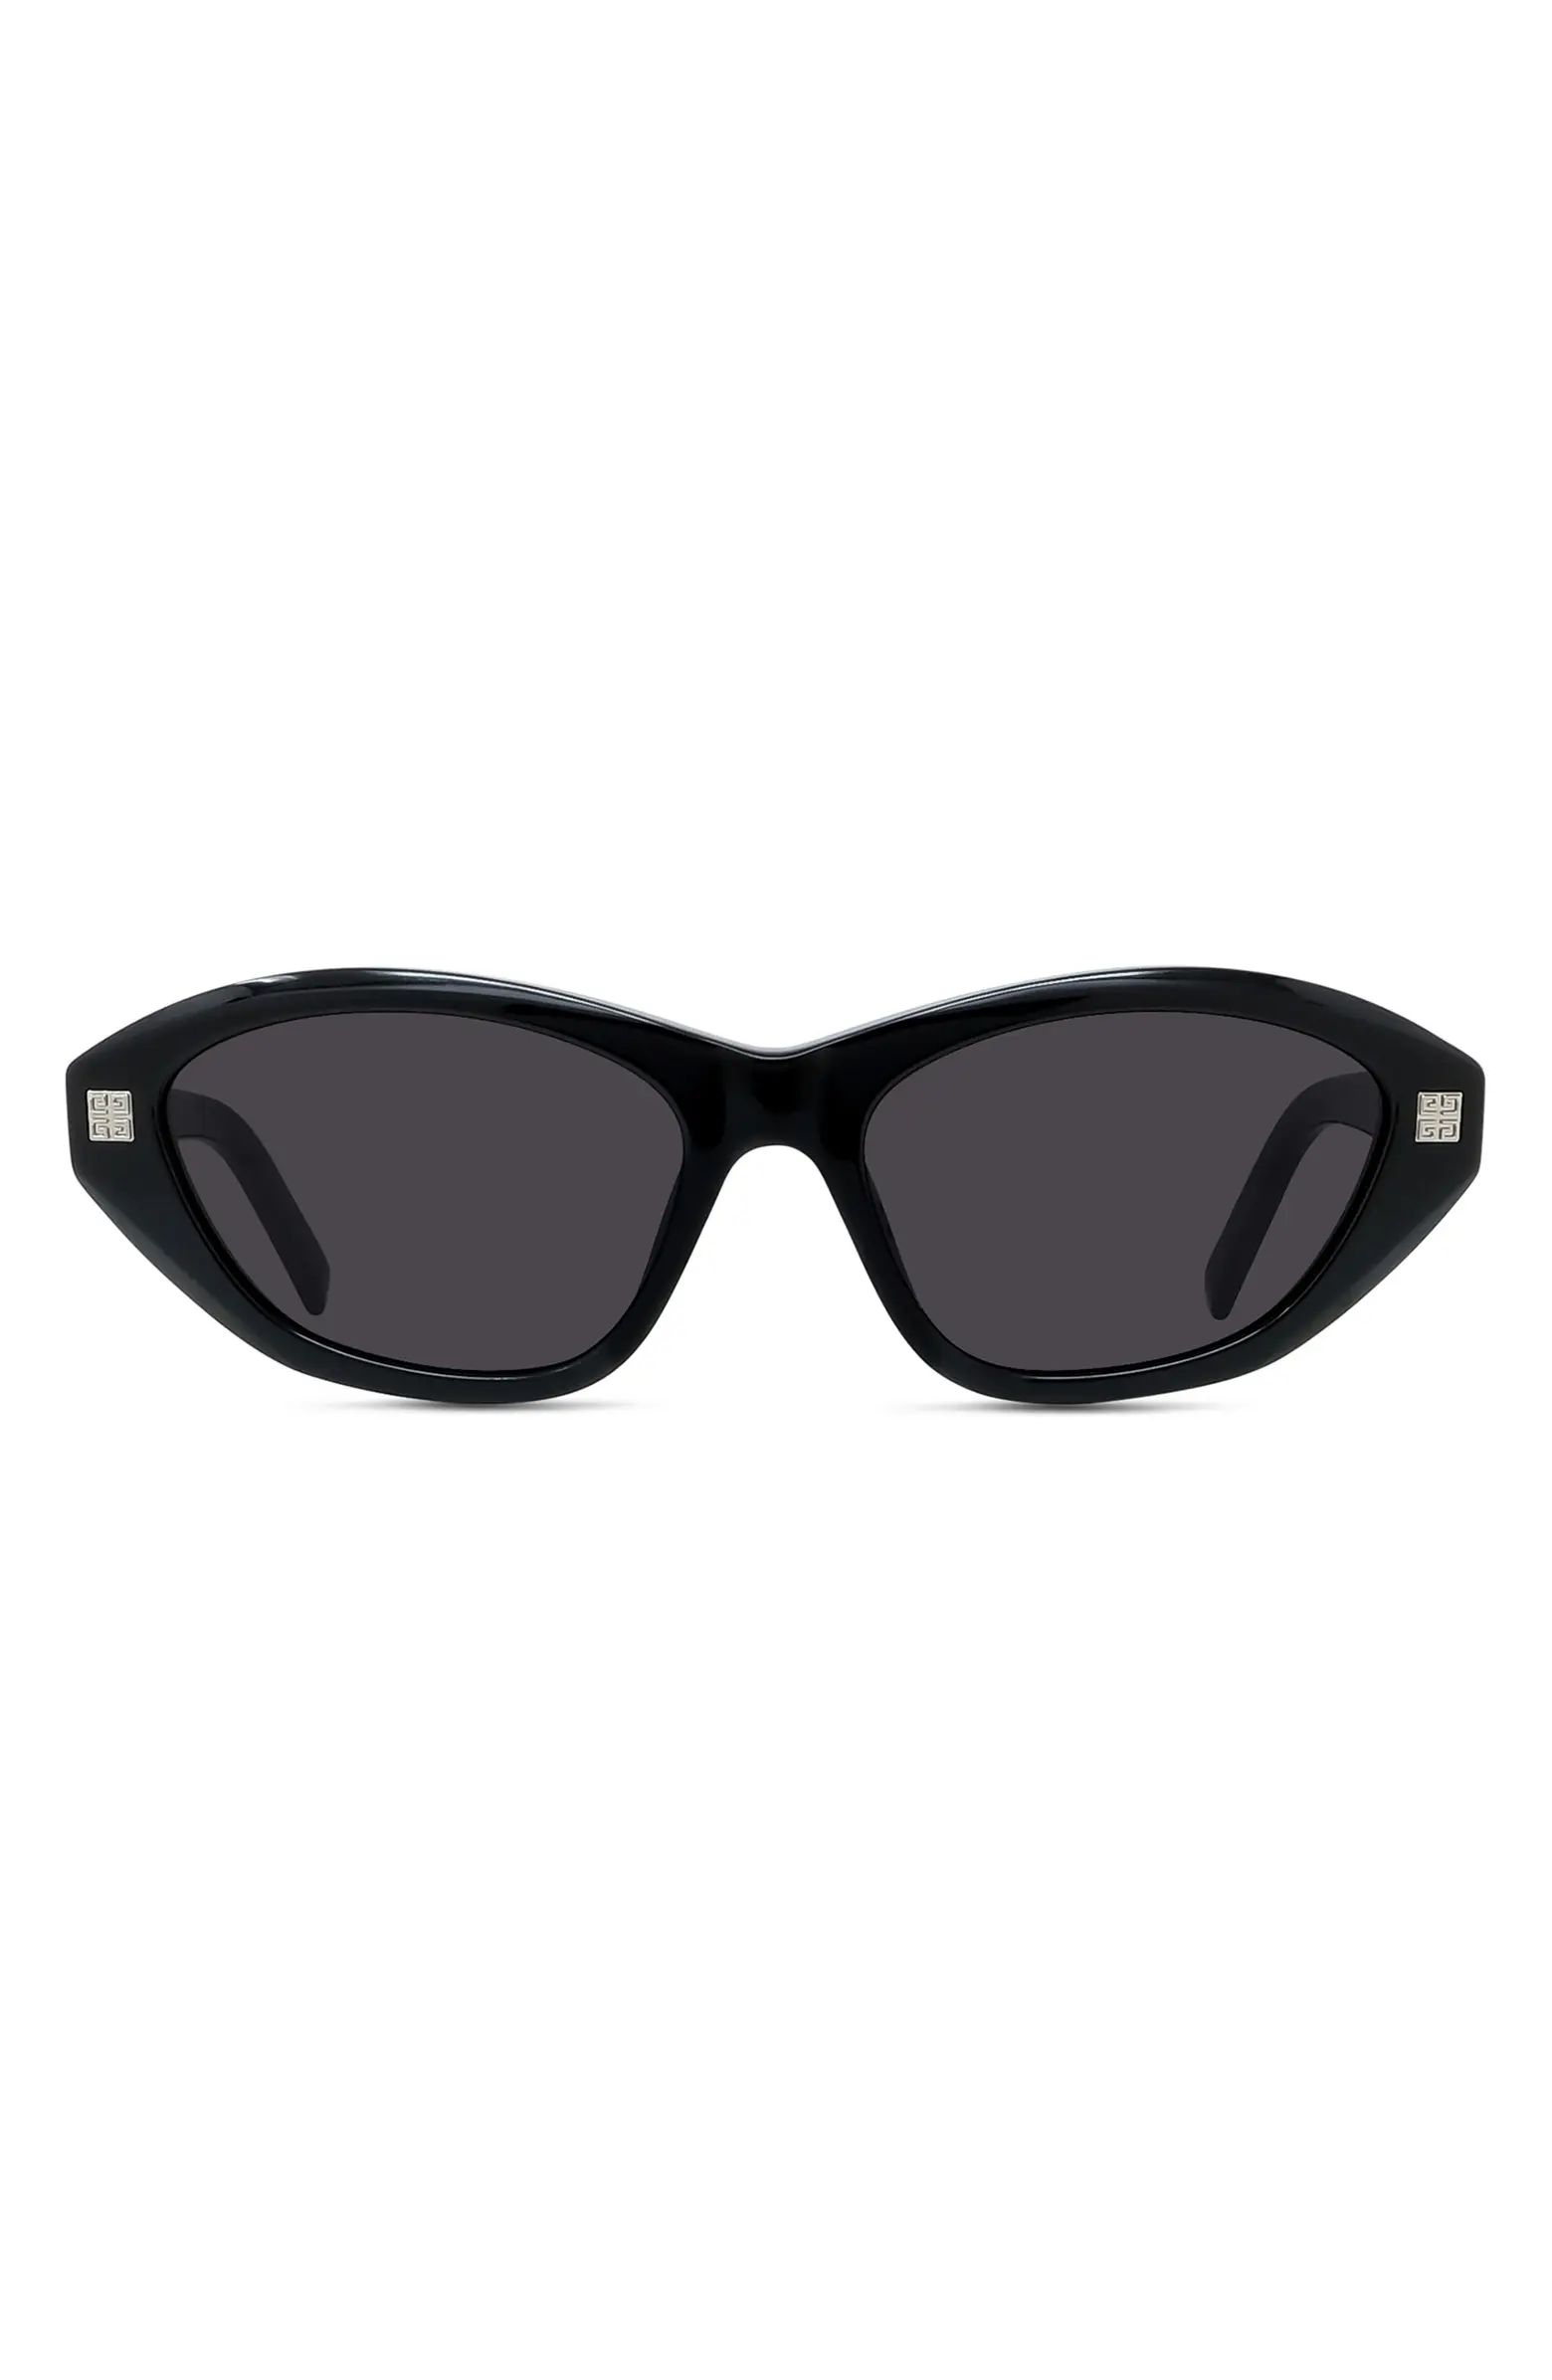 Givenchy GV Day 55mm Cat Eye Sunglasses | Nordstrom | Nordstrom